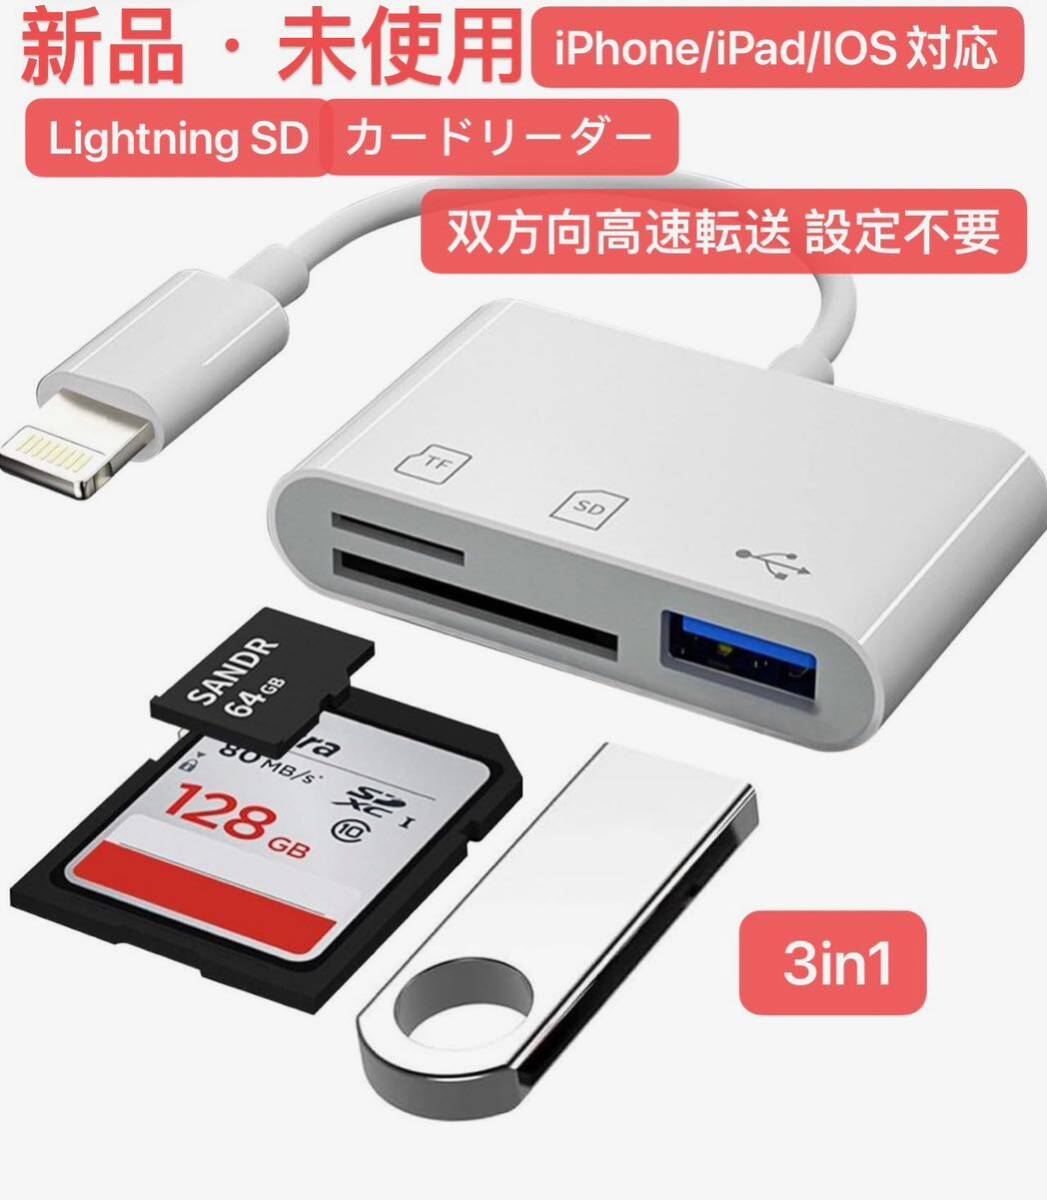 3in1 ライトニング SDカードカメラリーダー メモリカードリーダー Lighting to USBアダプタ SDカード/TFカード/USB3.0 OTG機能読み書き同時